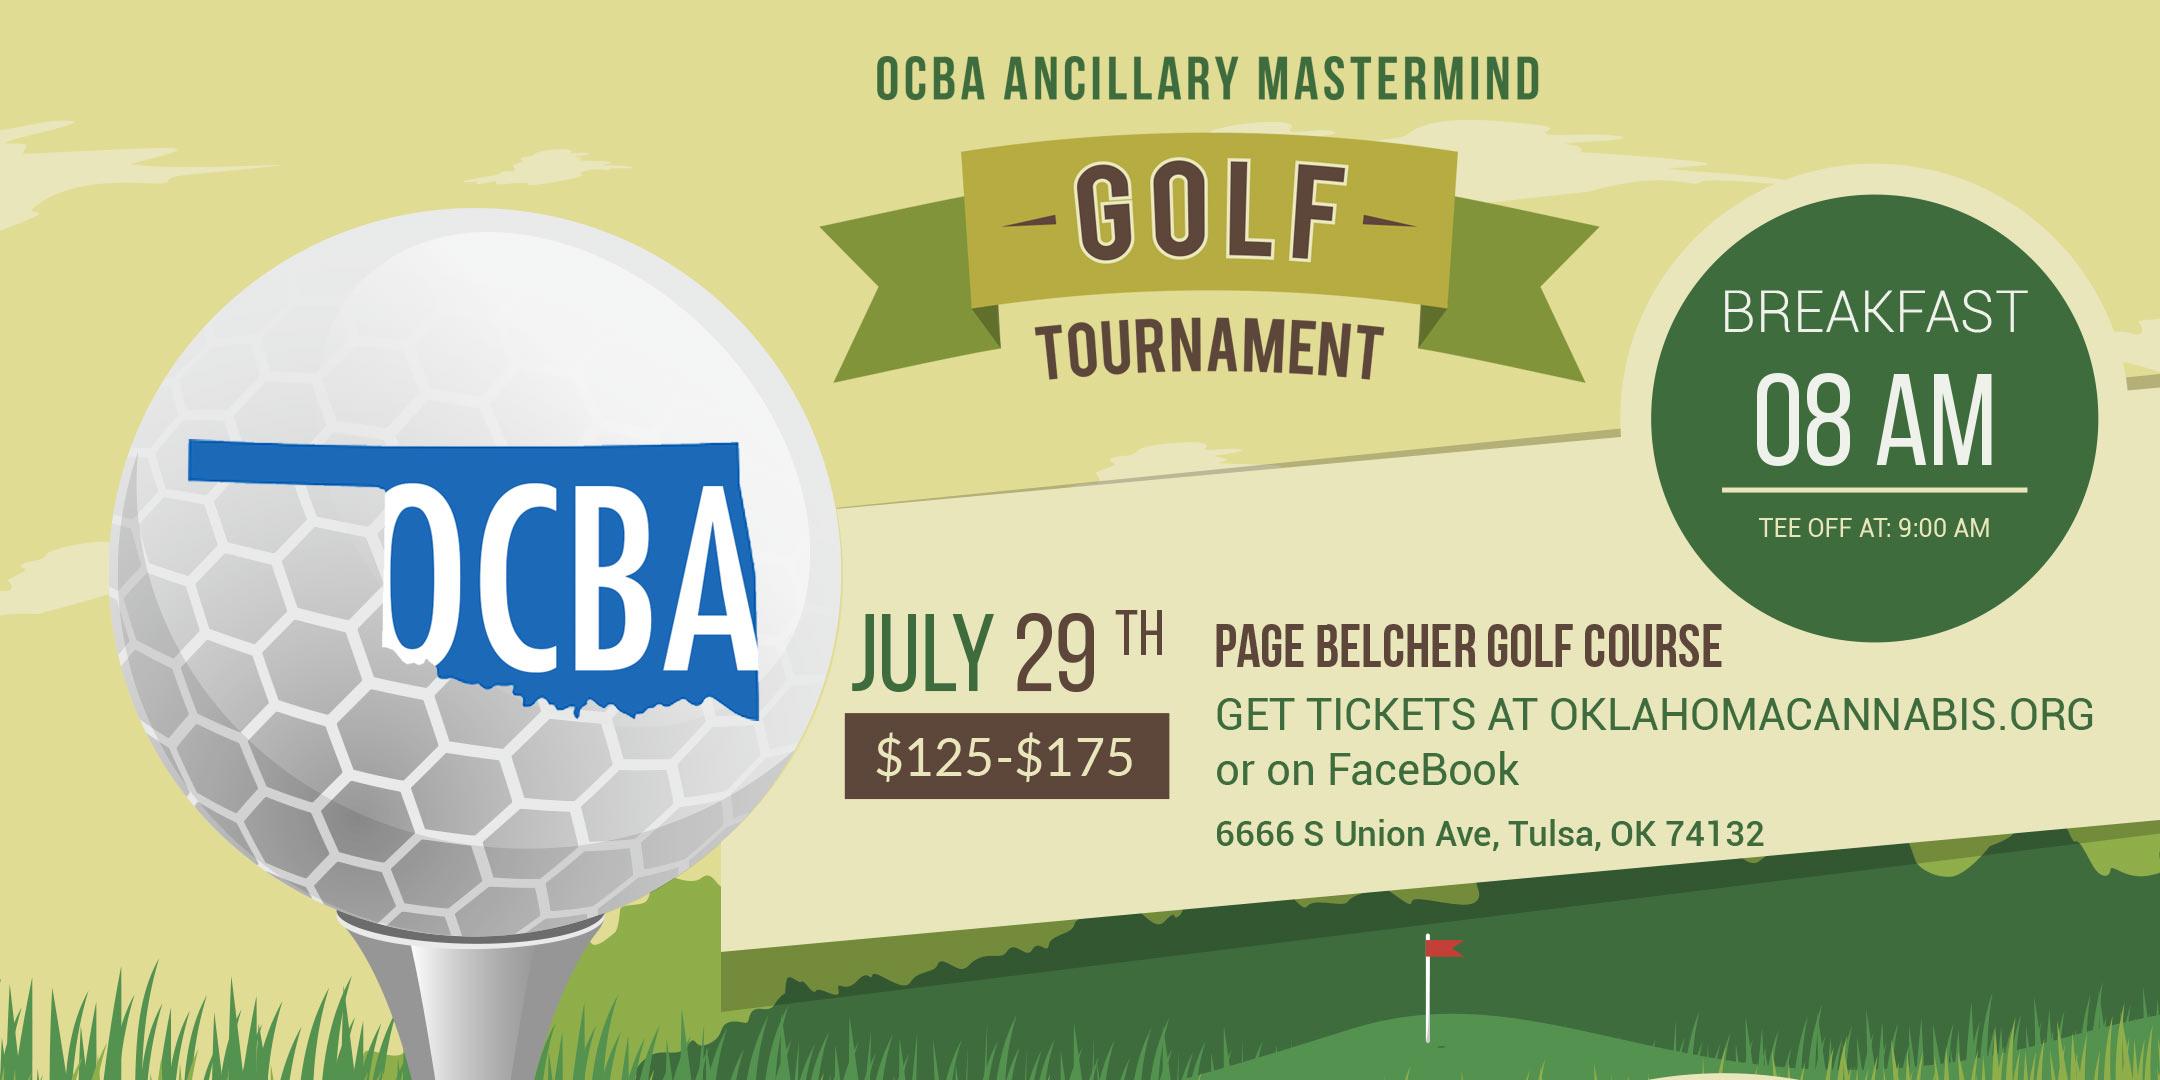 OCBA Ancillary Mastermind Golf Tournament